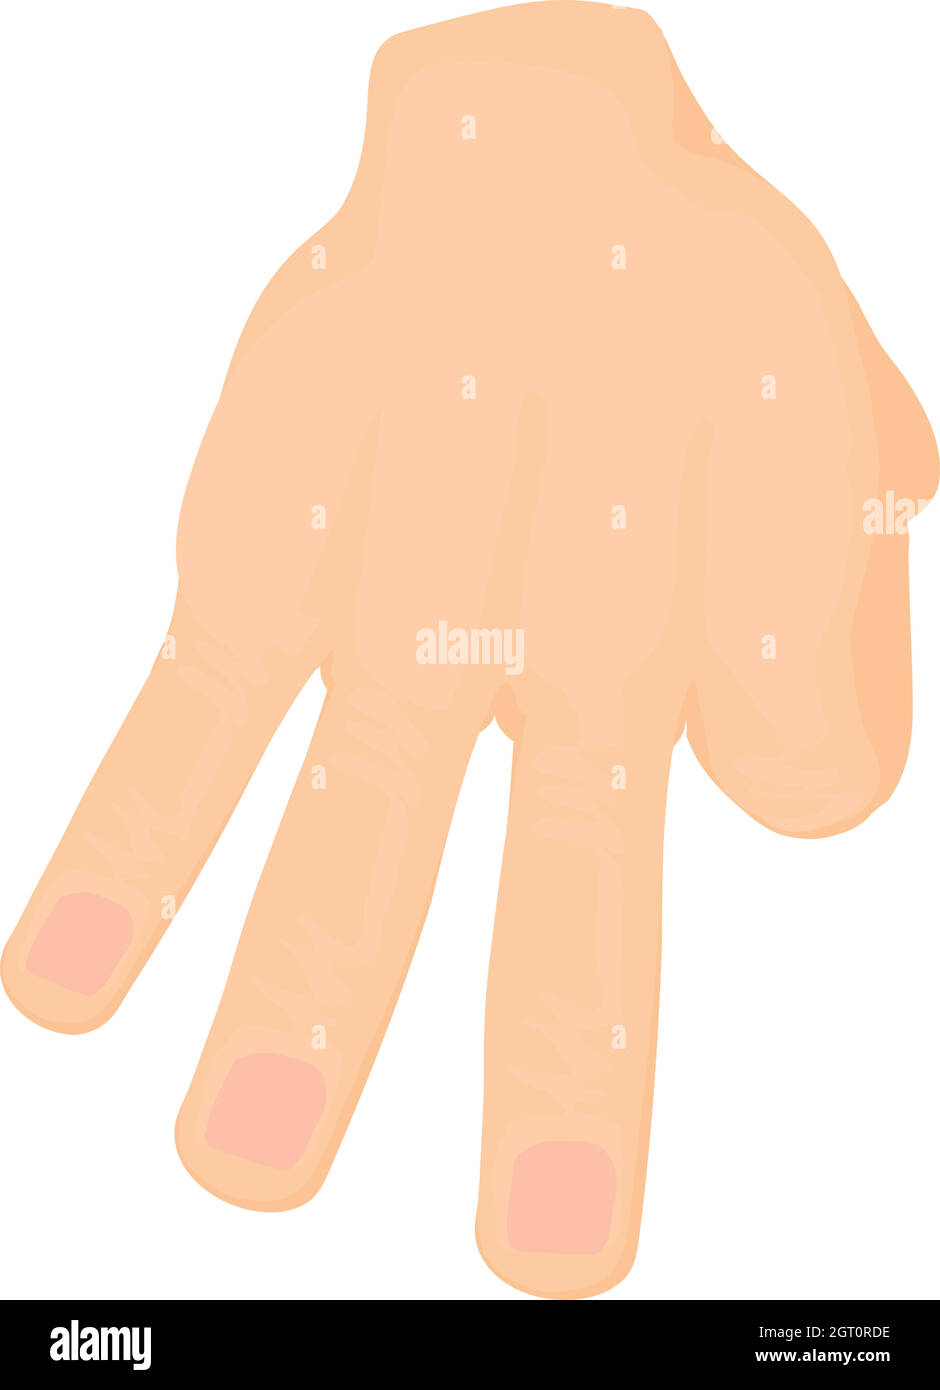 Three fingers icon, cartoon style Stock Vector